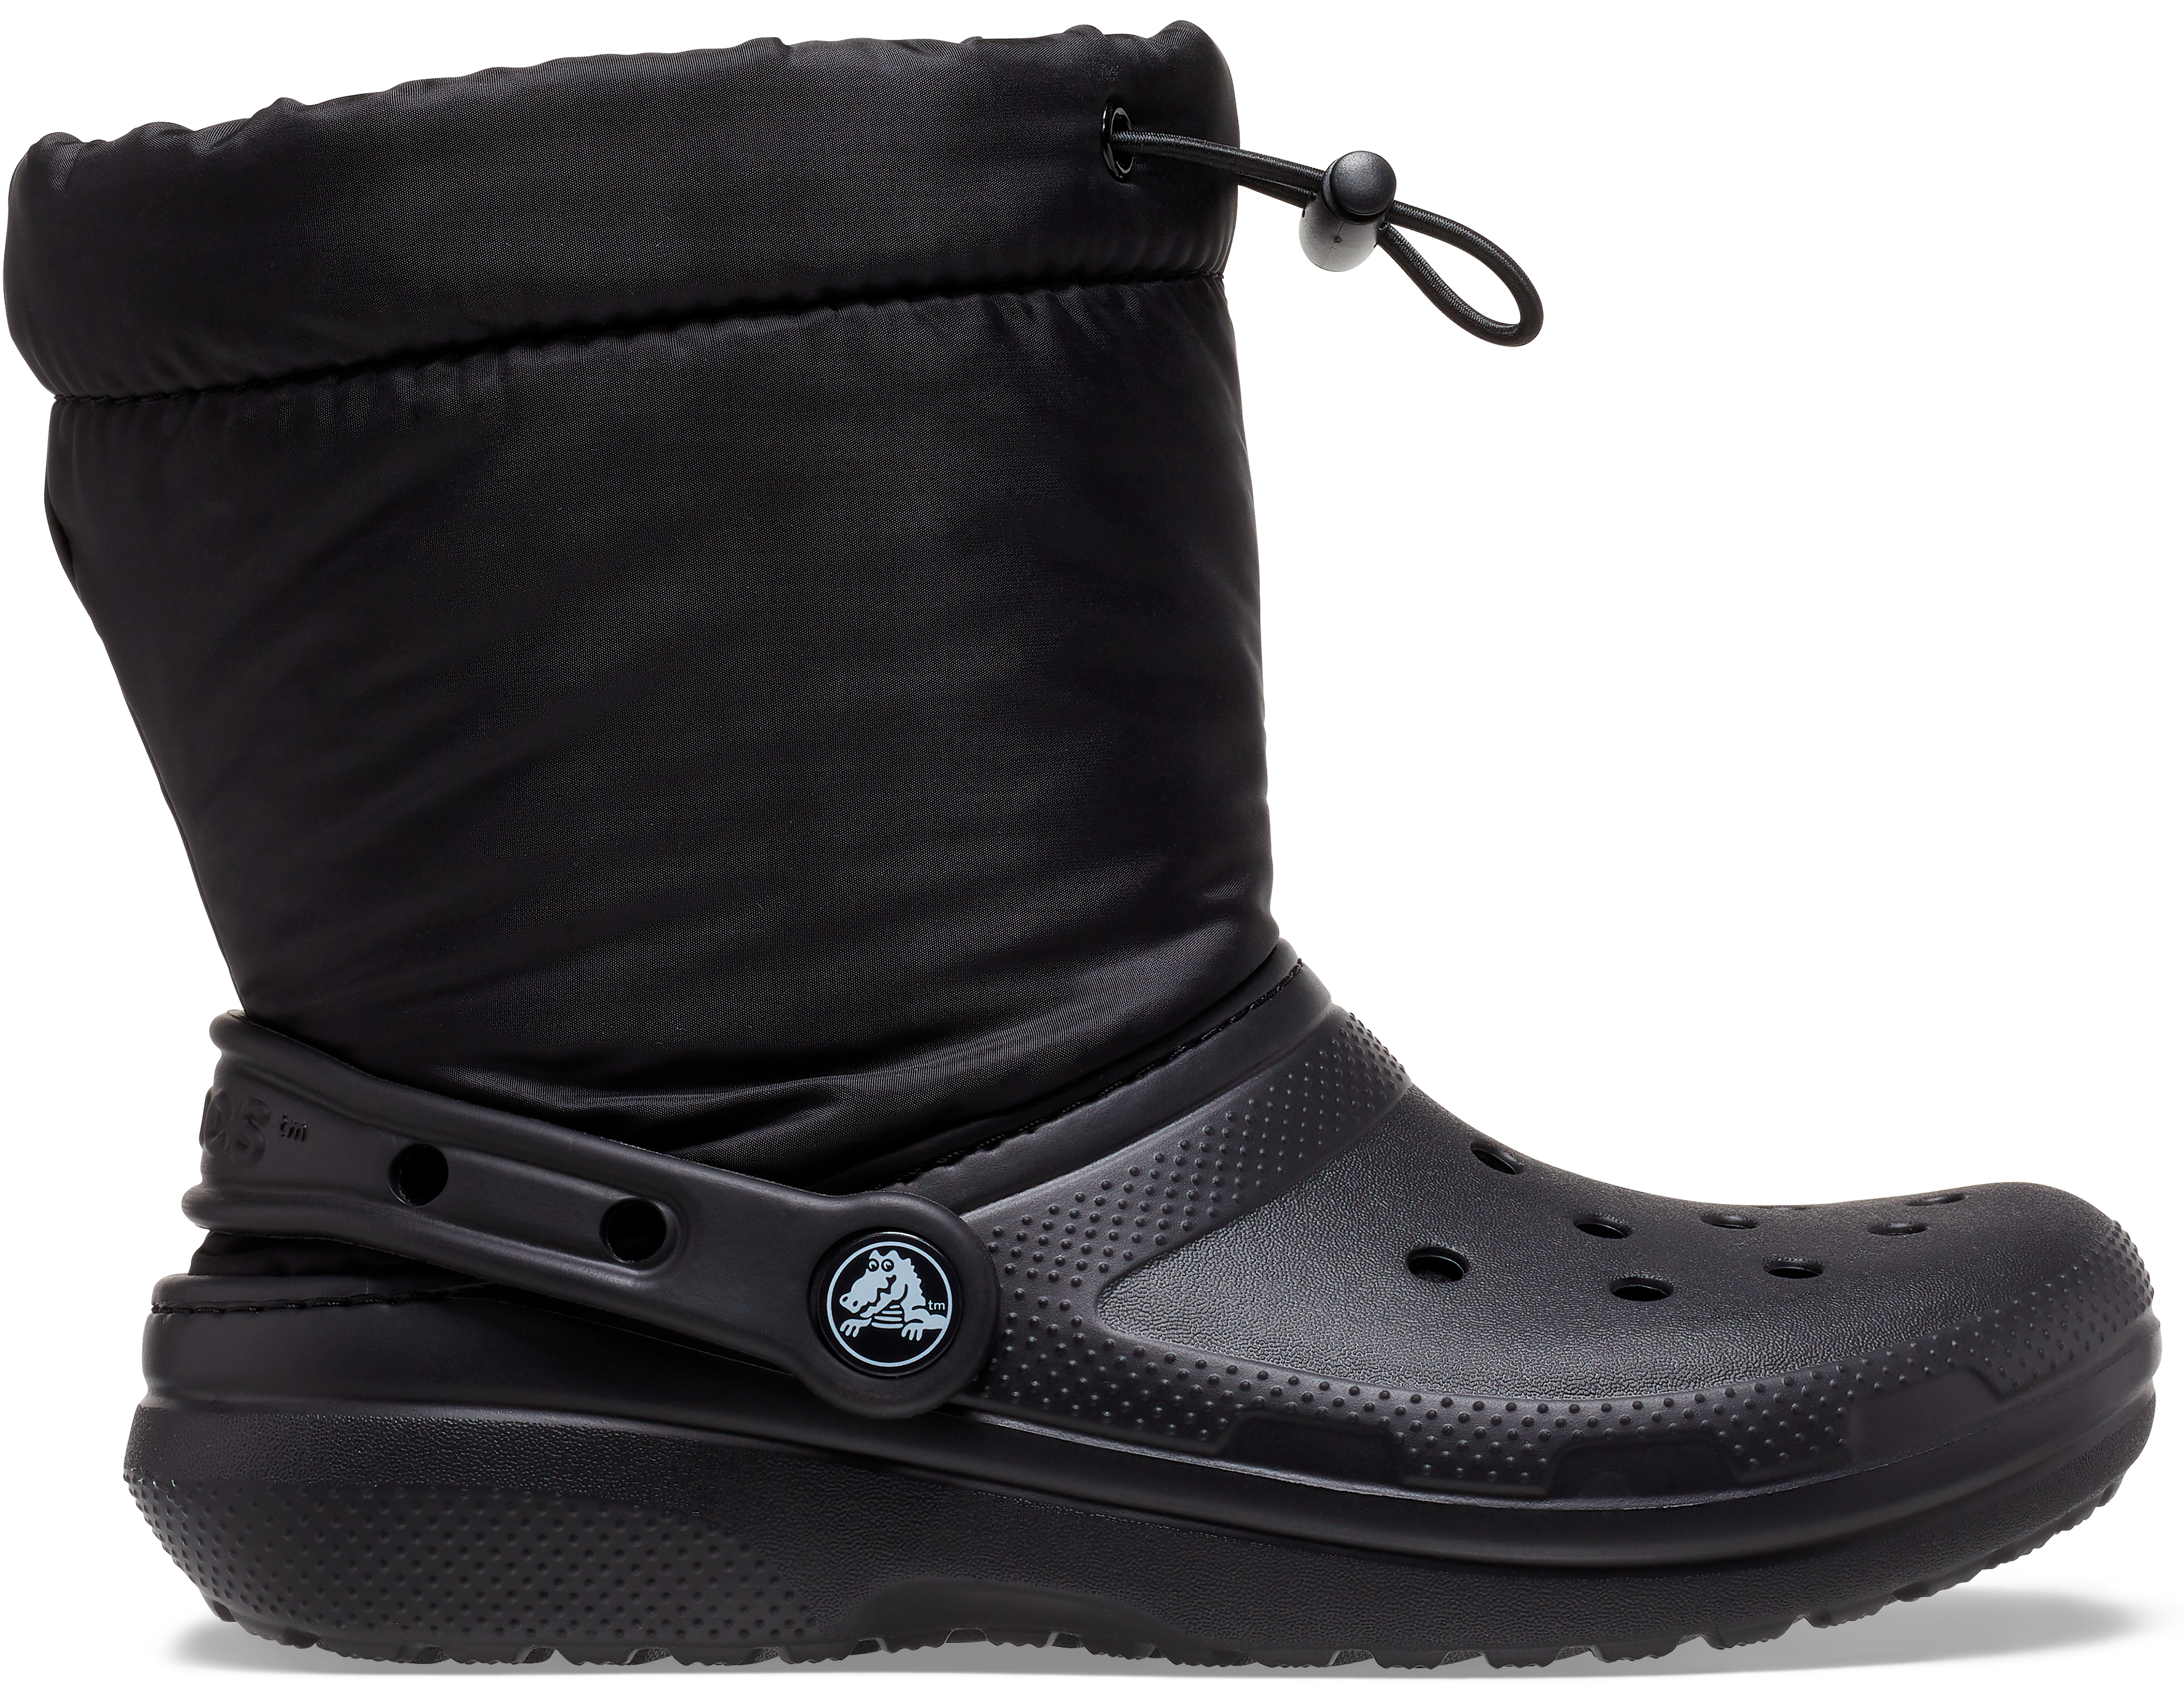 Crocs | Kids | Classic Lined Neo Puff Boot | Boots | Black | J3